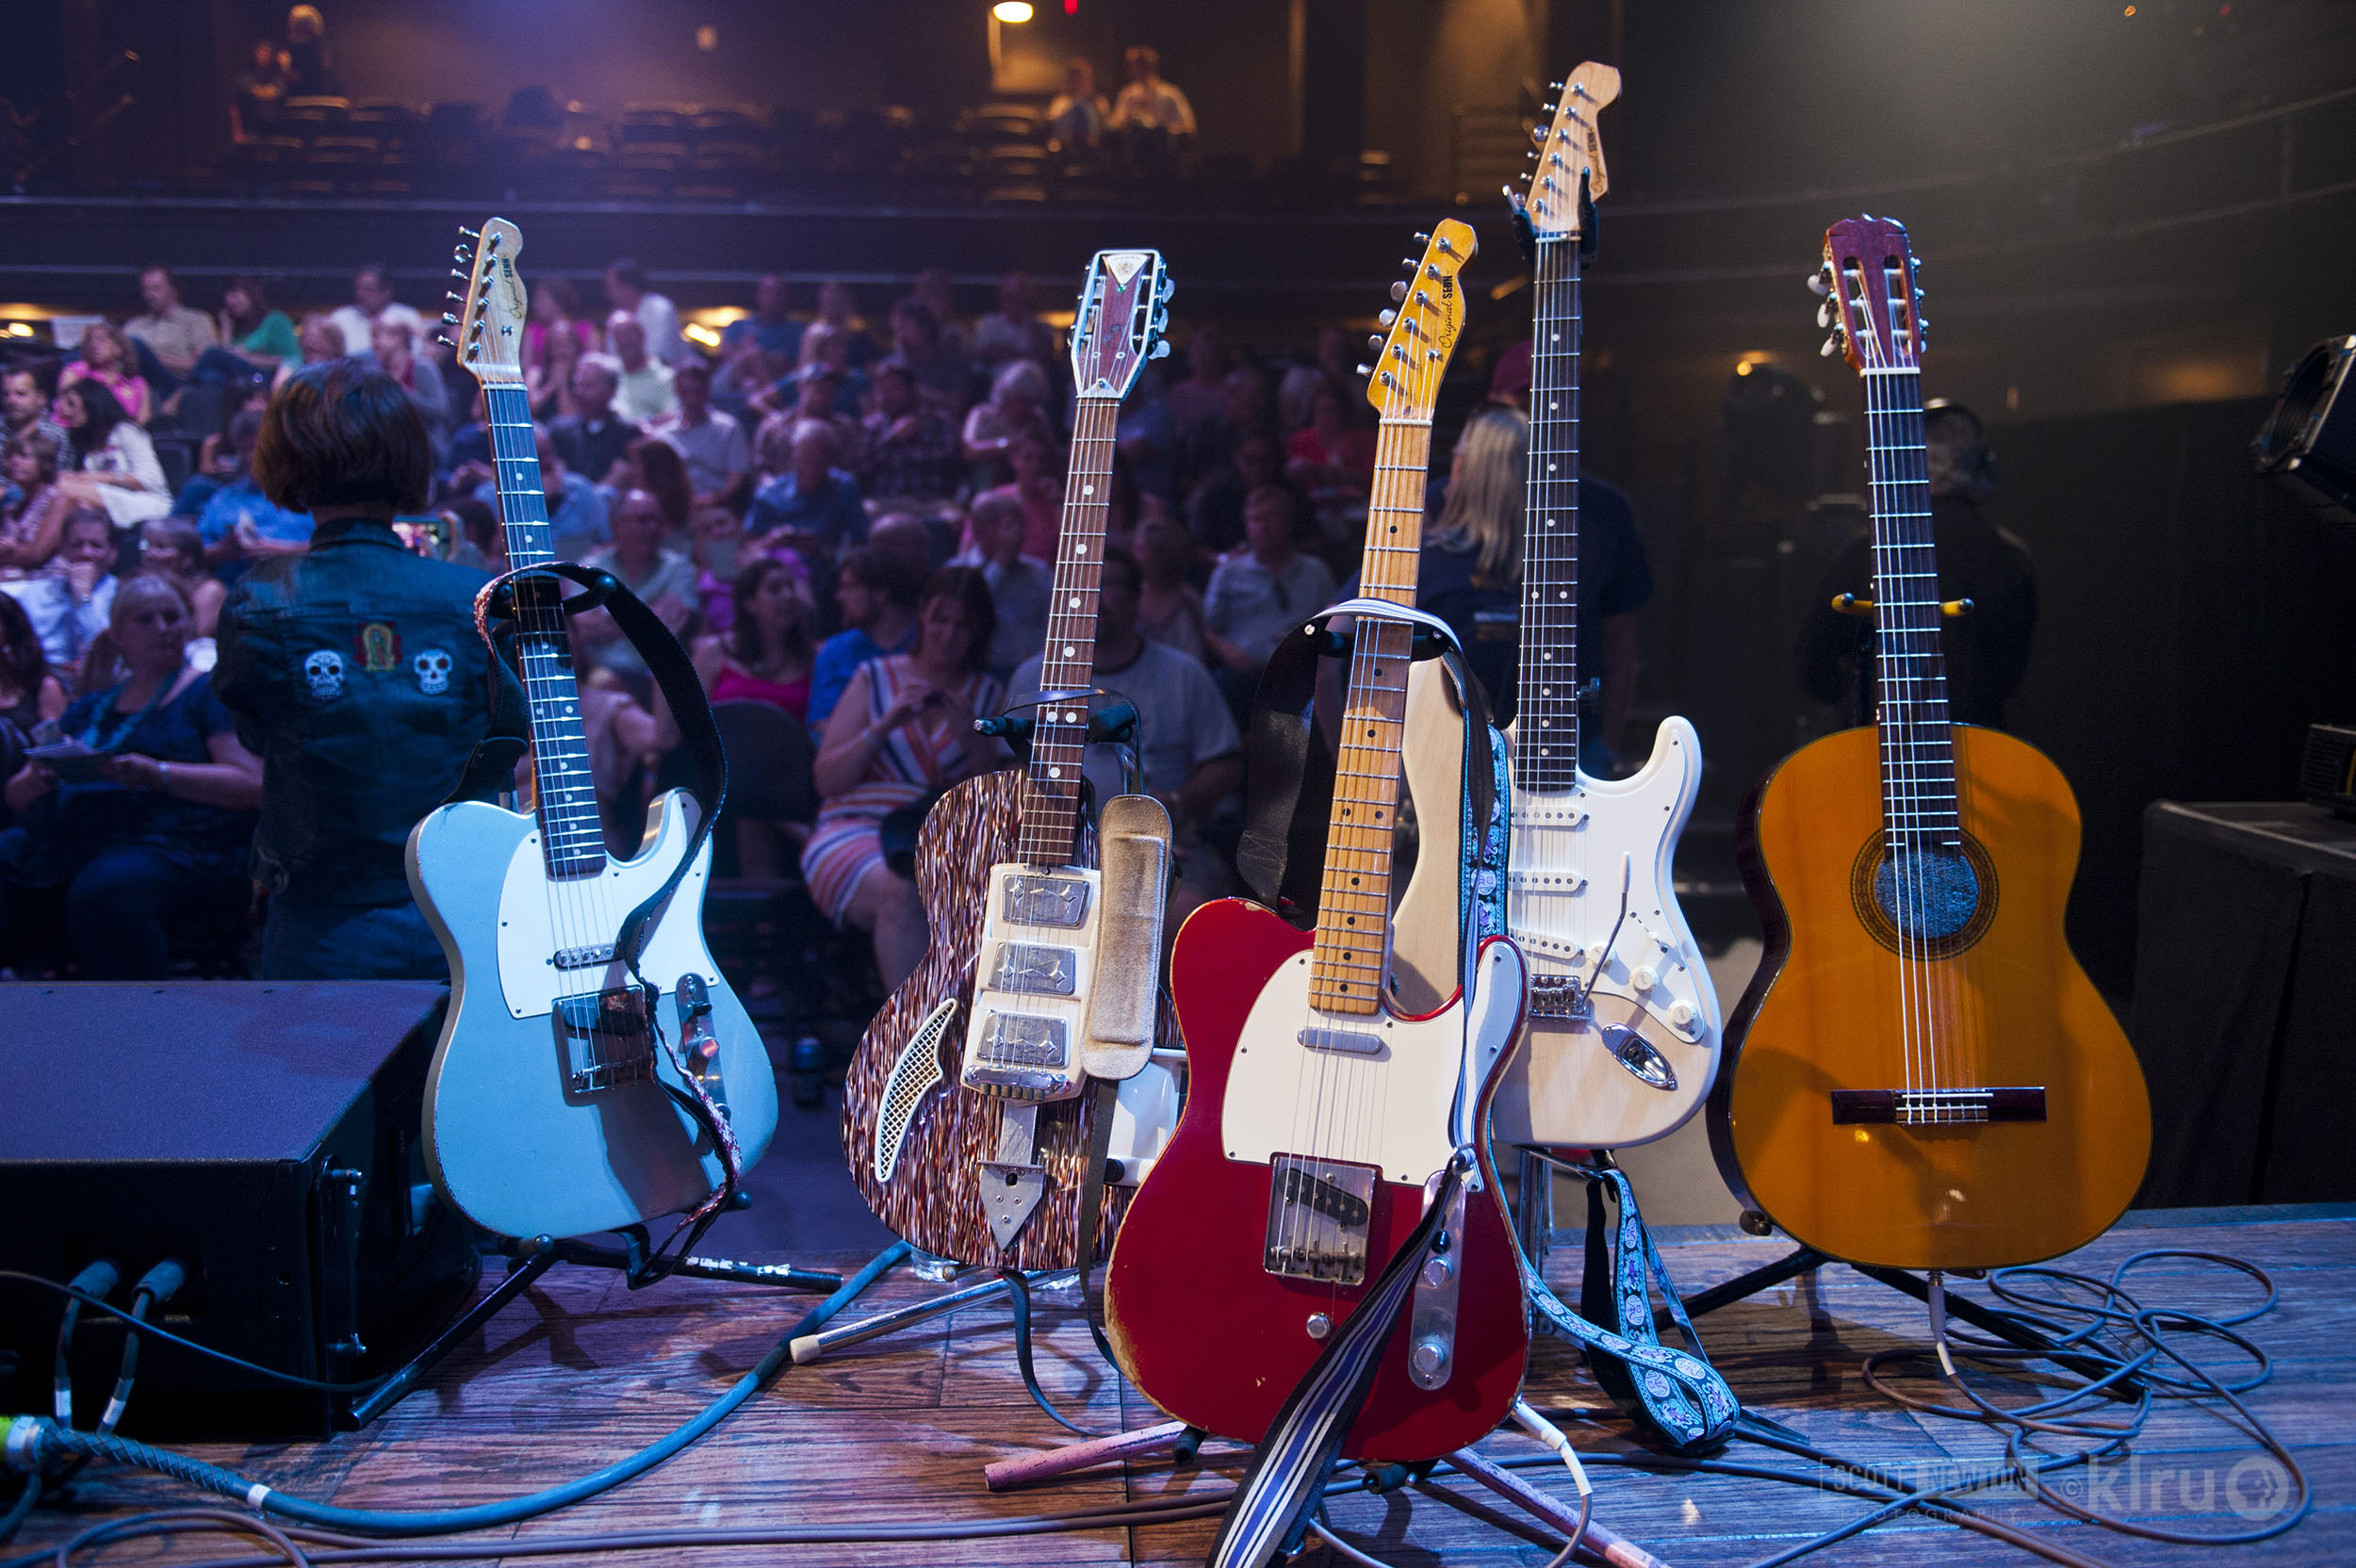 Emmylou and Rodney's Bands' Guitars  2013